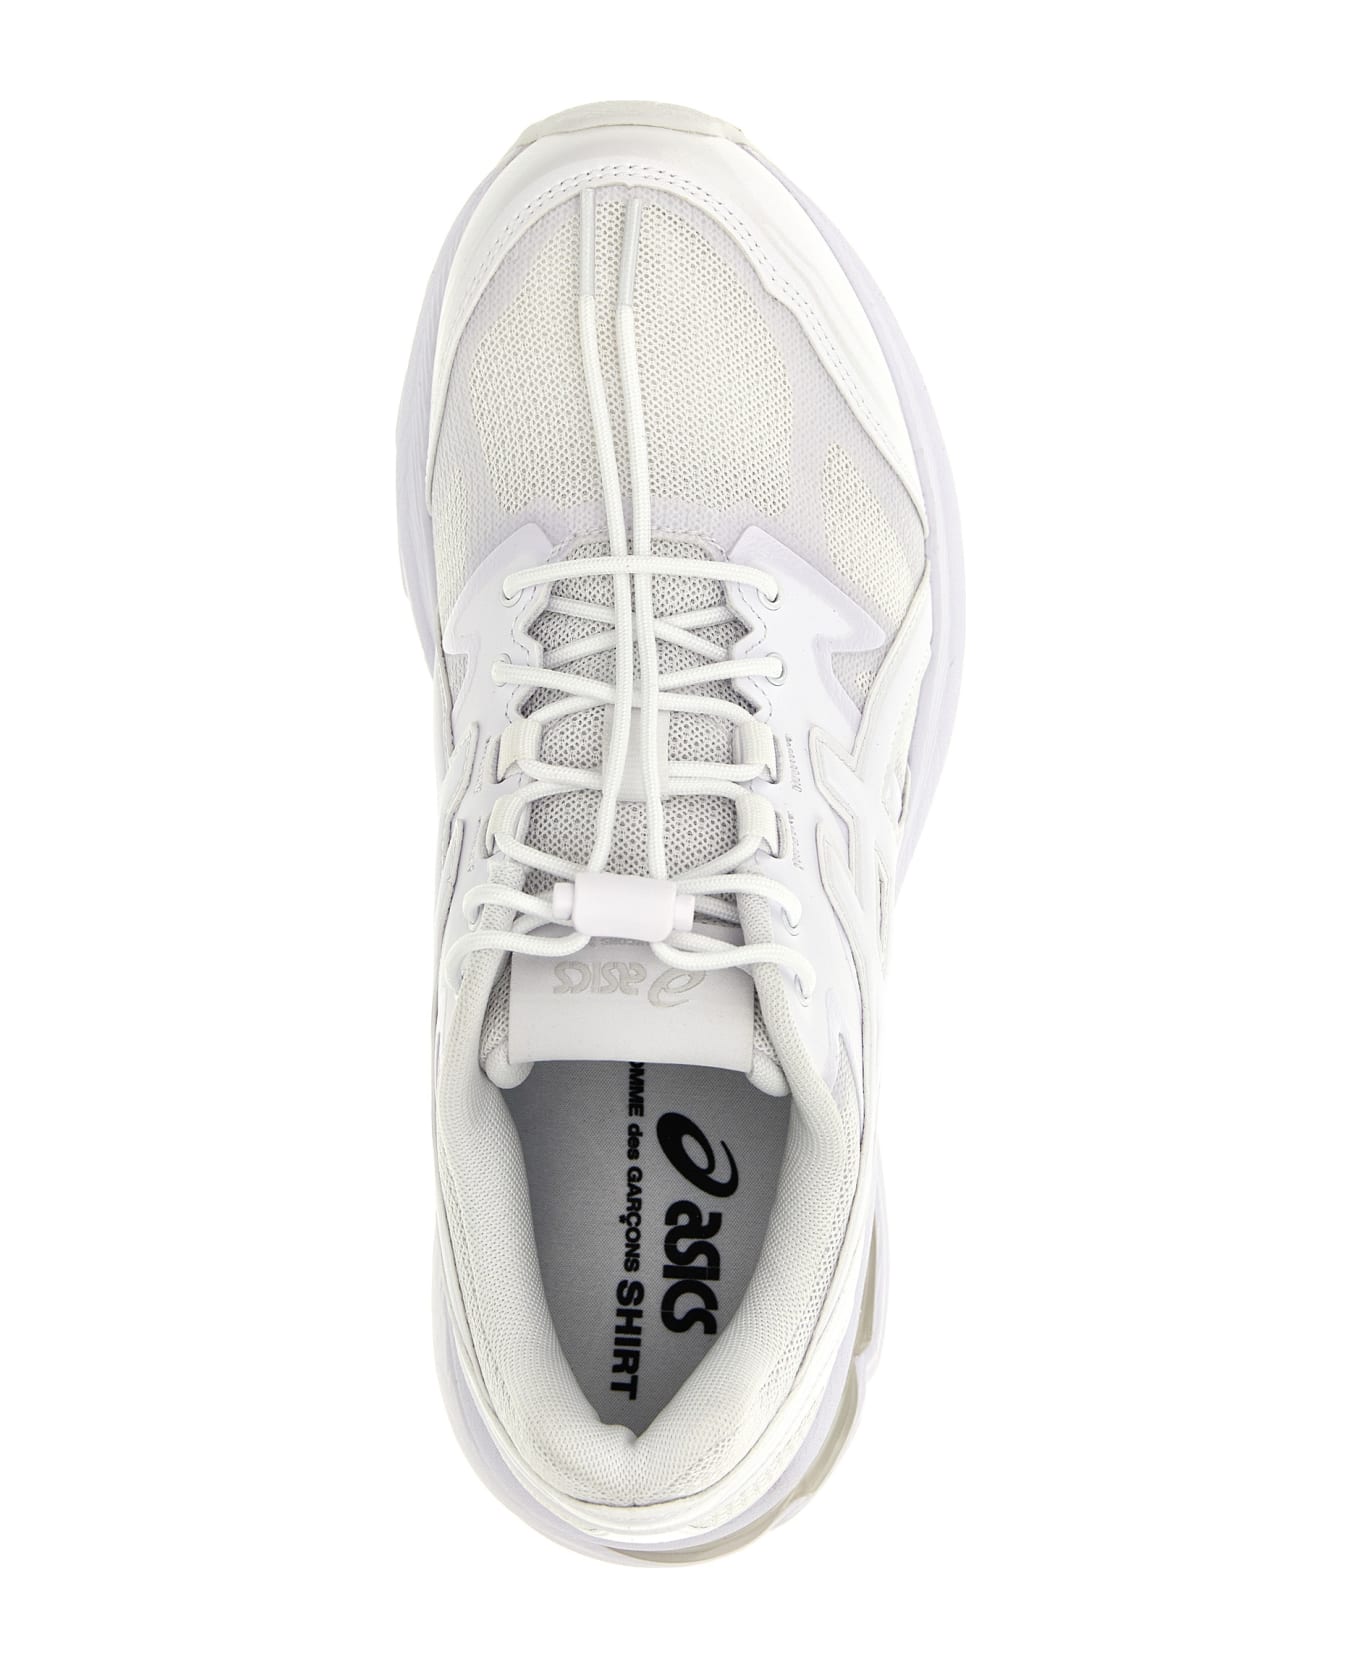 Comme des Garçons Shirt 'gel-terrain' Sneakers - White スニーカー